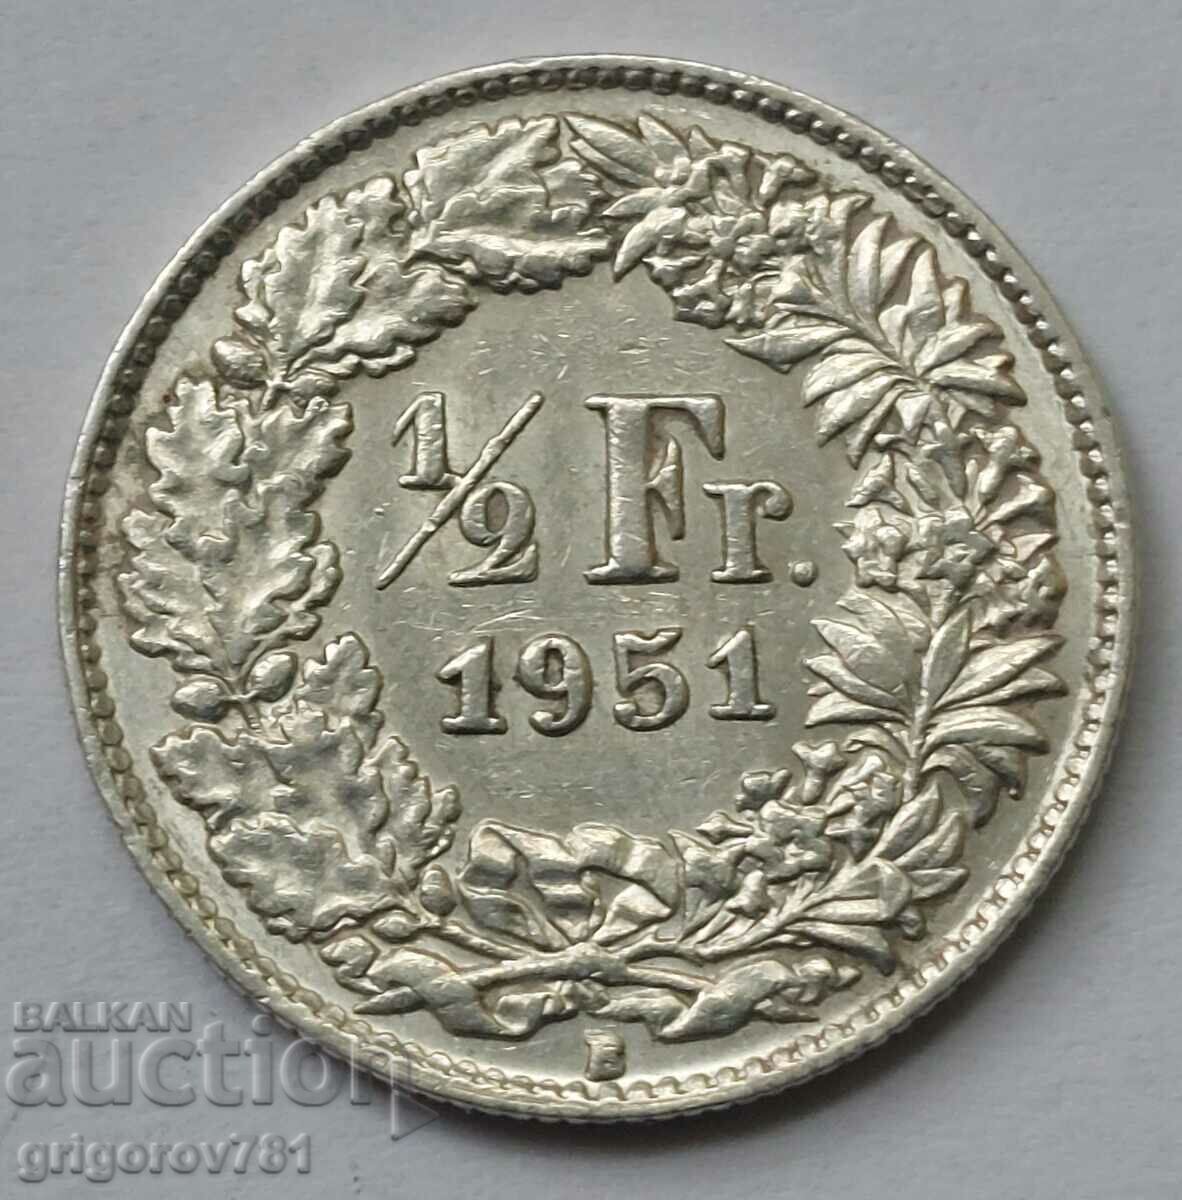 1/2 Franc Argint Elveția 1951 B - Monedă de argint #93